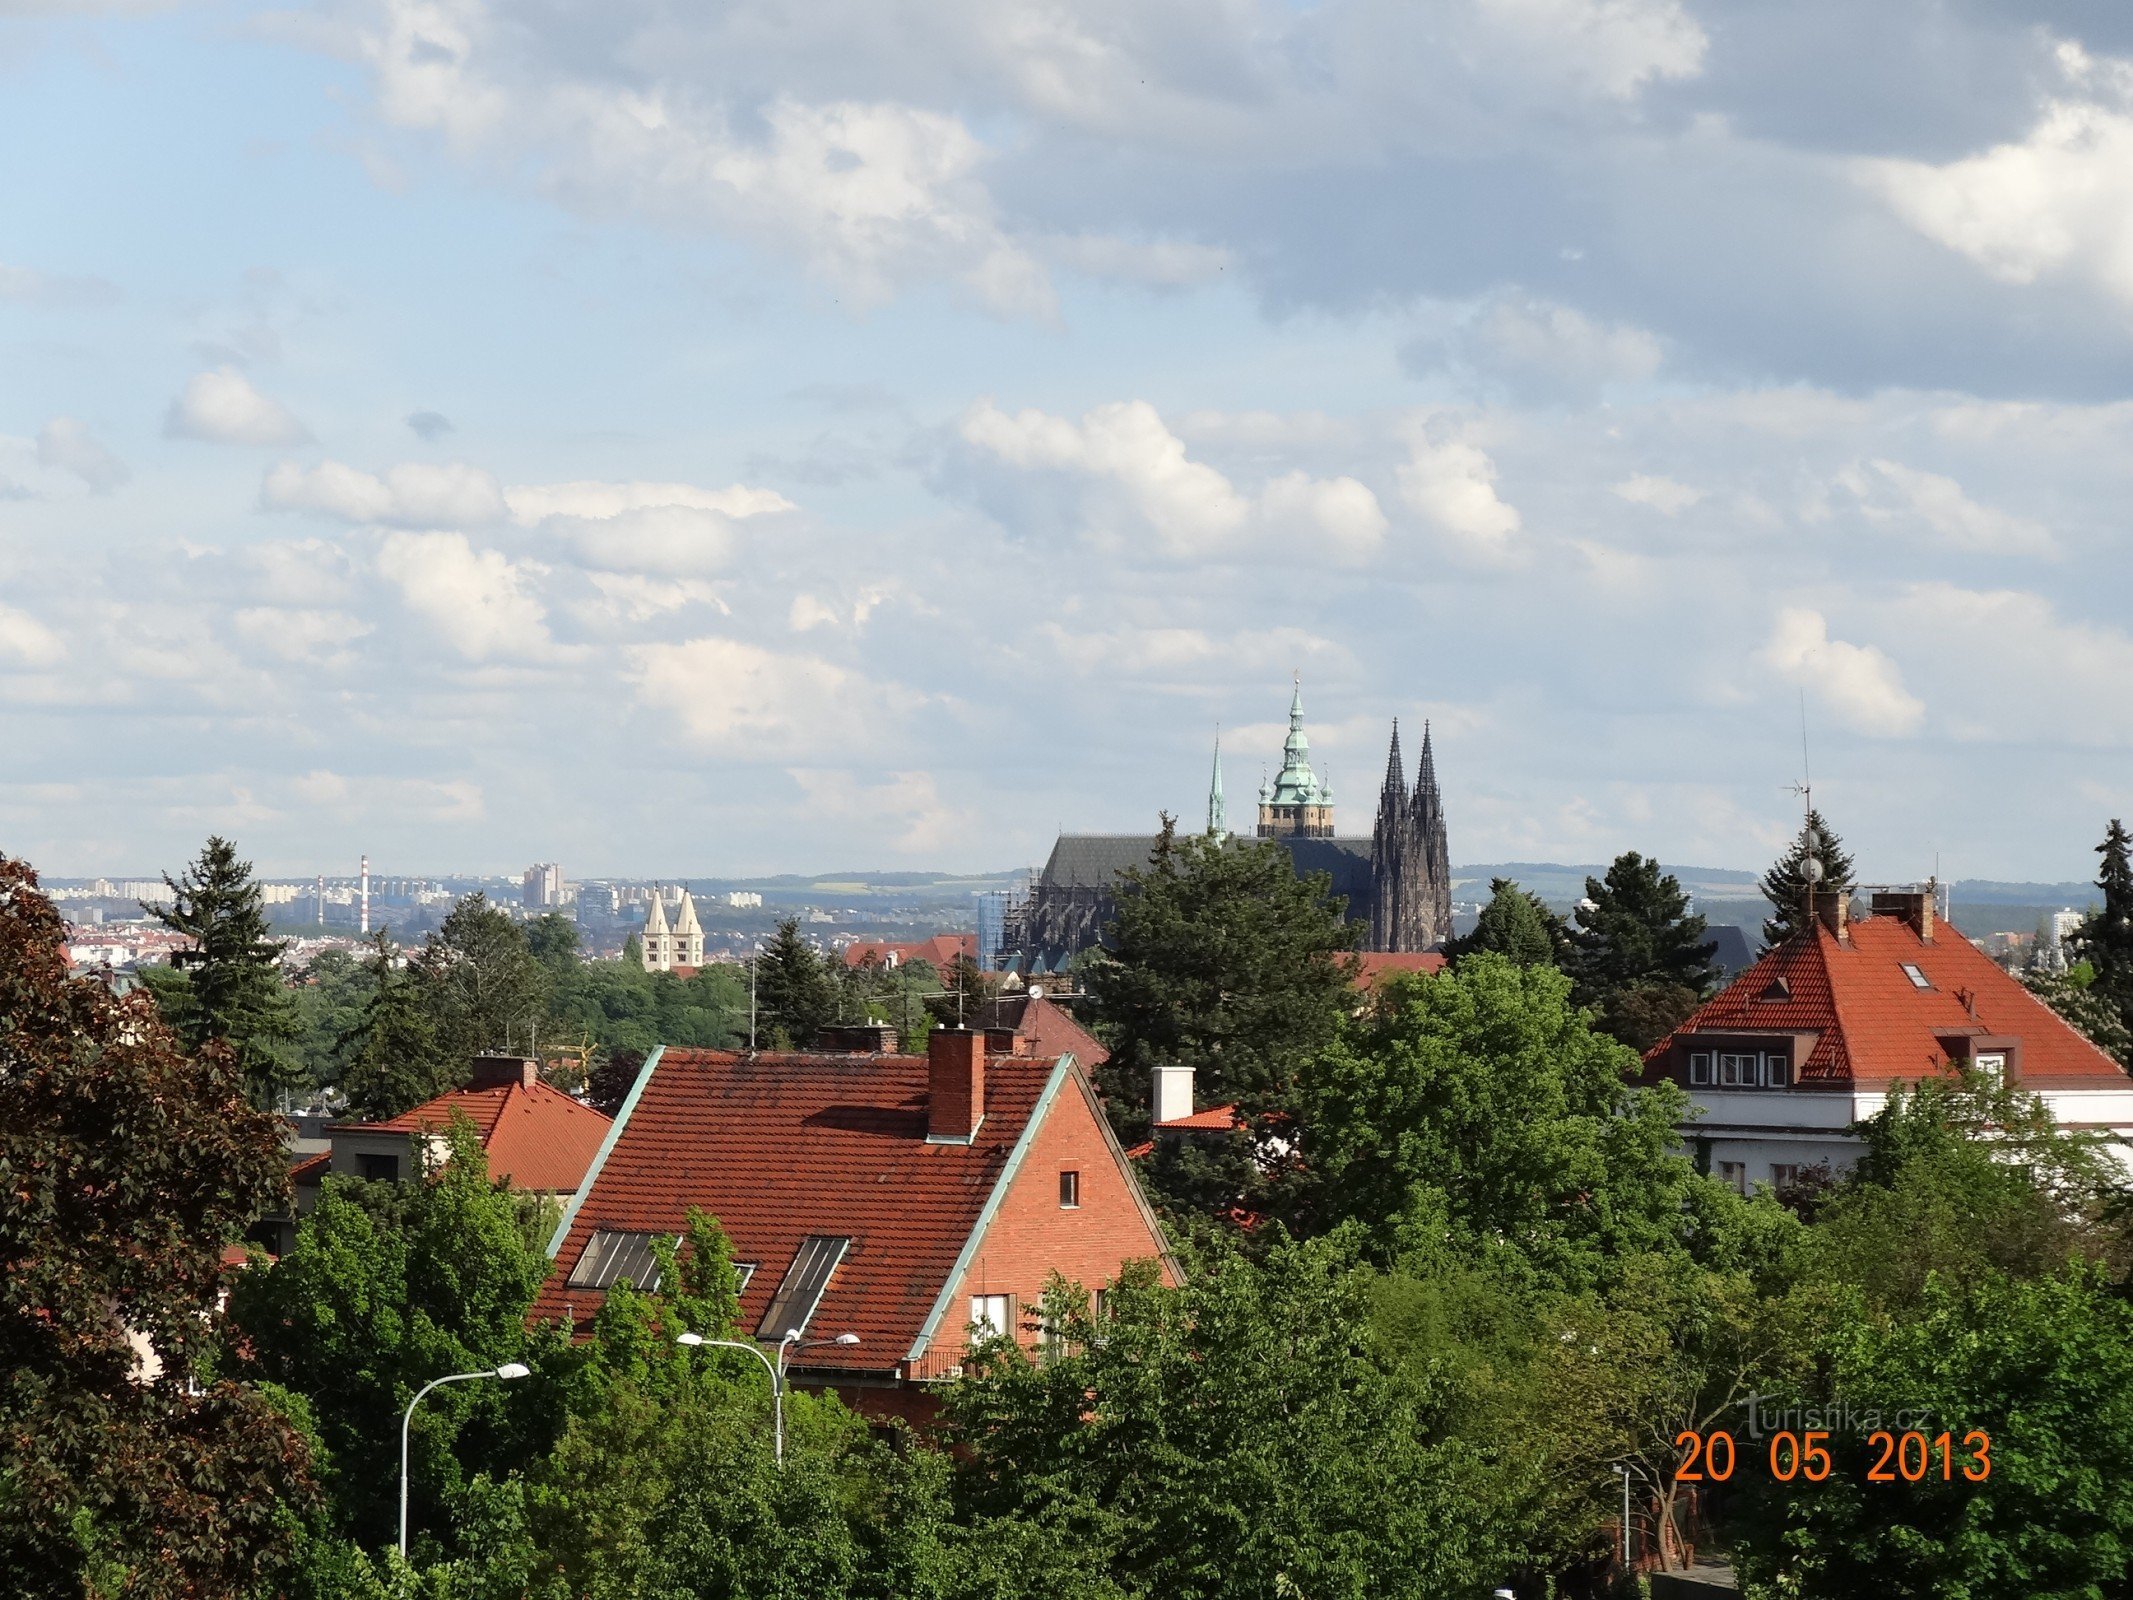 Widok z zamku Hanspaulka na zamek